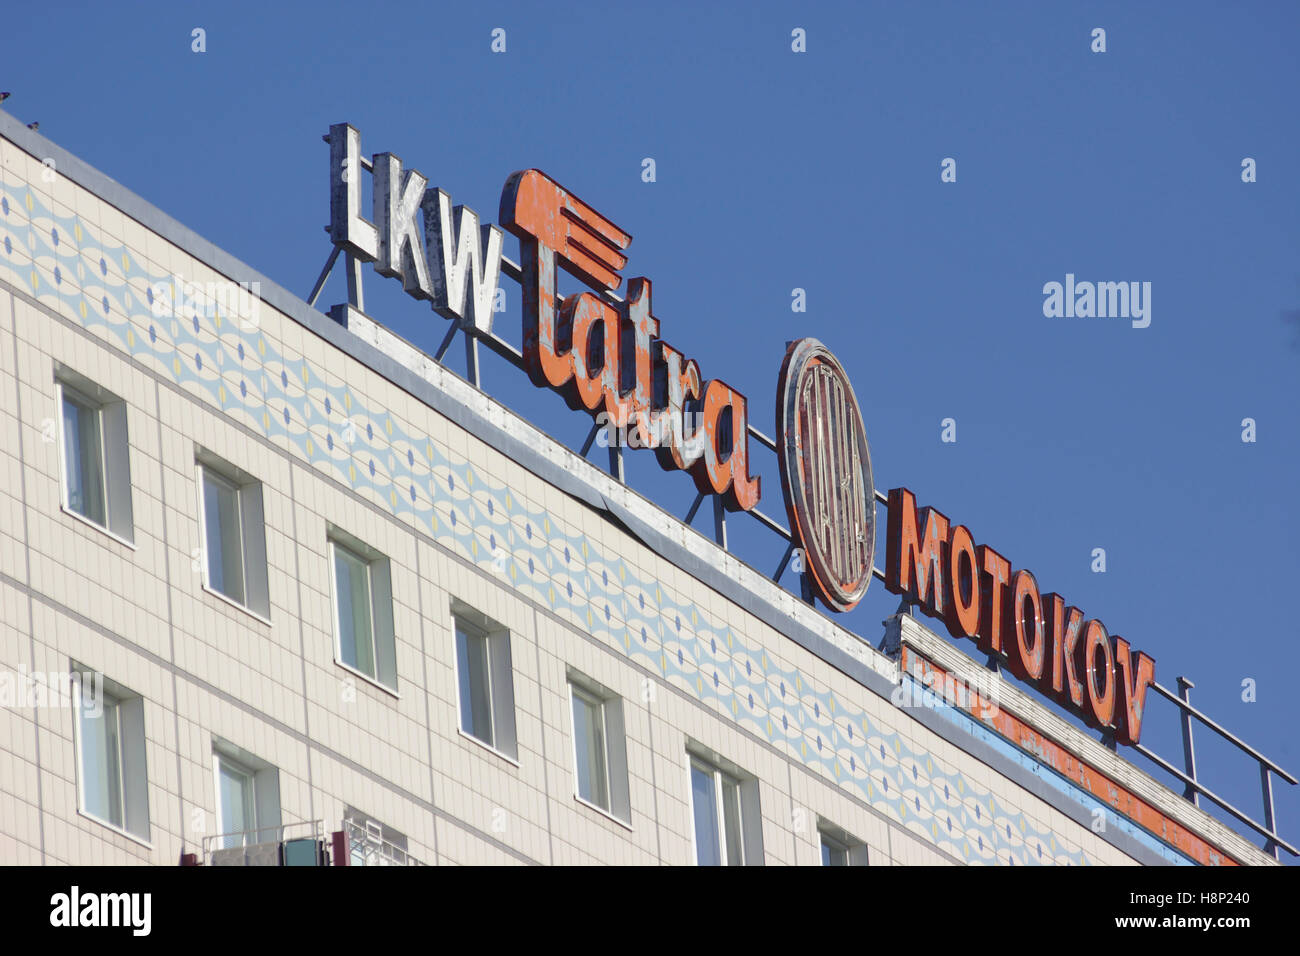 LKW Tartra Mokokov sign, DDR era Plattenbau on Karl-Marx-Allee, Berlin Stock Photo